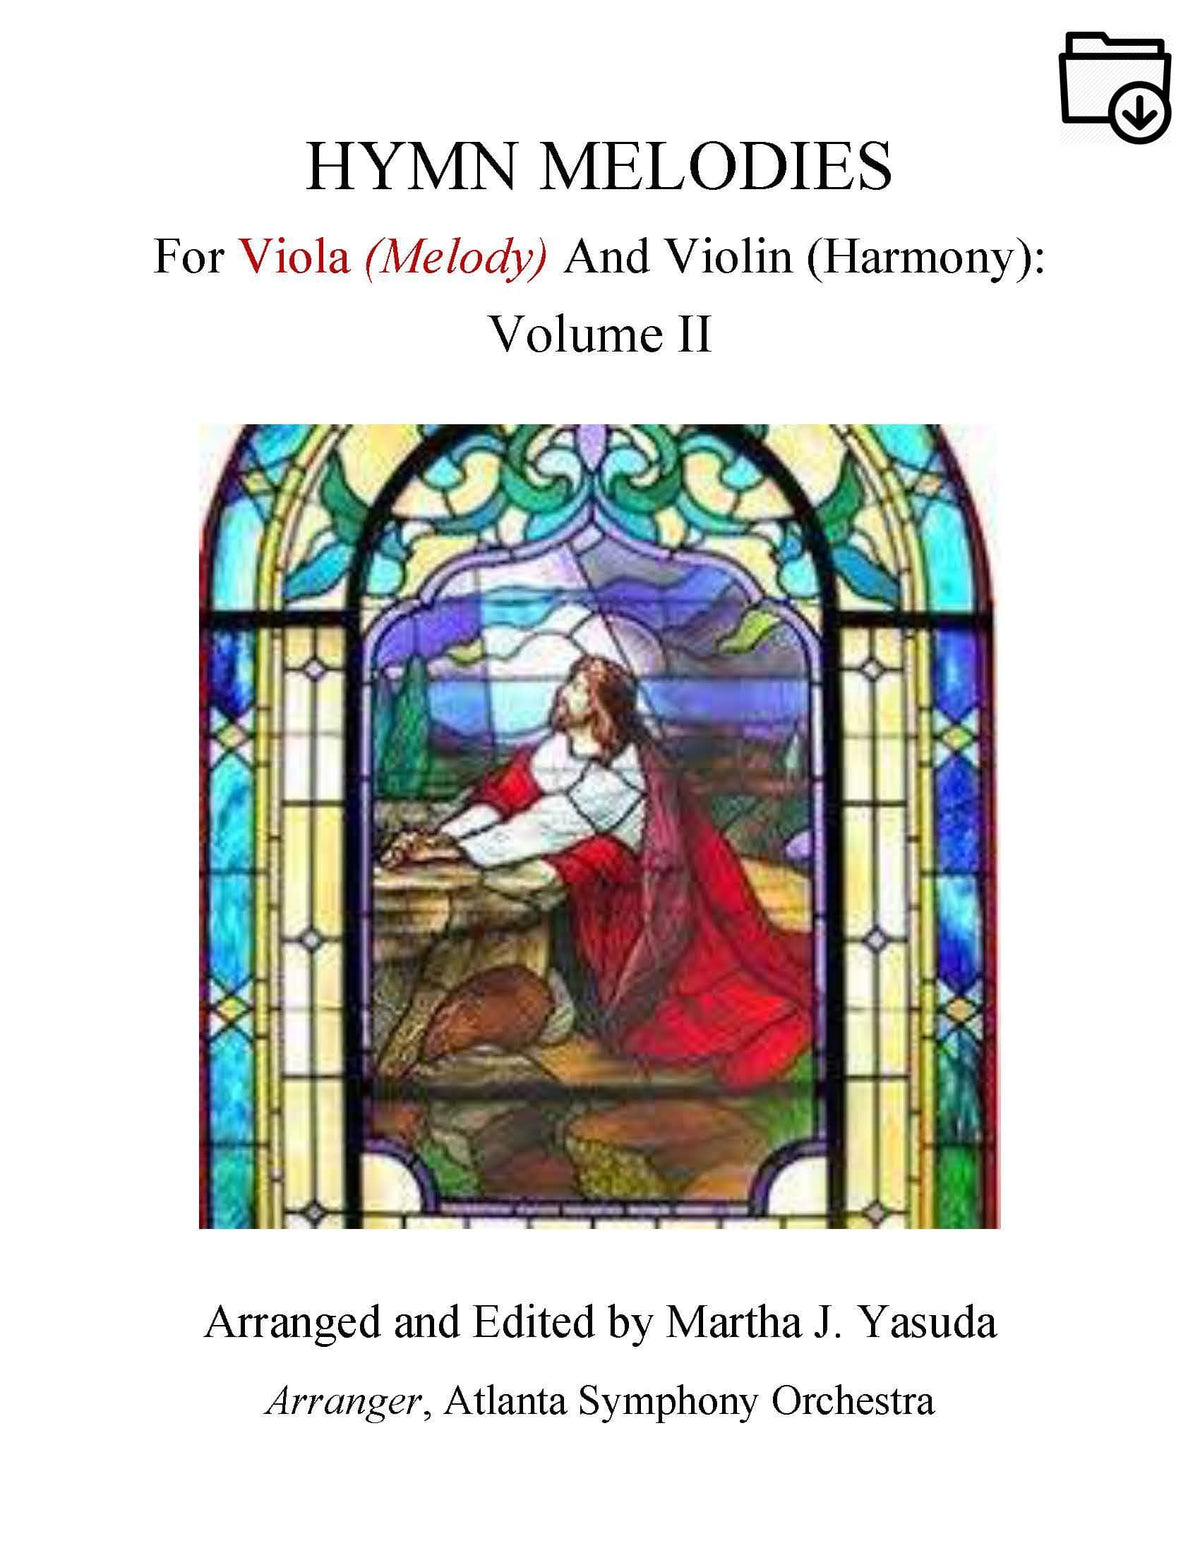 Yasuda, Martha - Hymn Melodies For Viola and Violin, Volume II - Digital Download